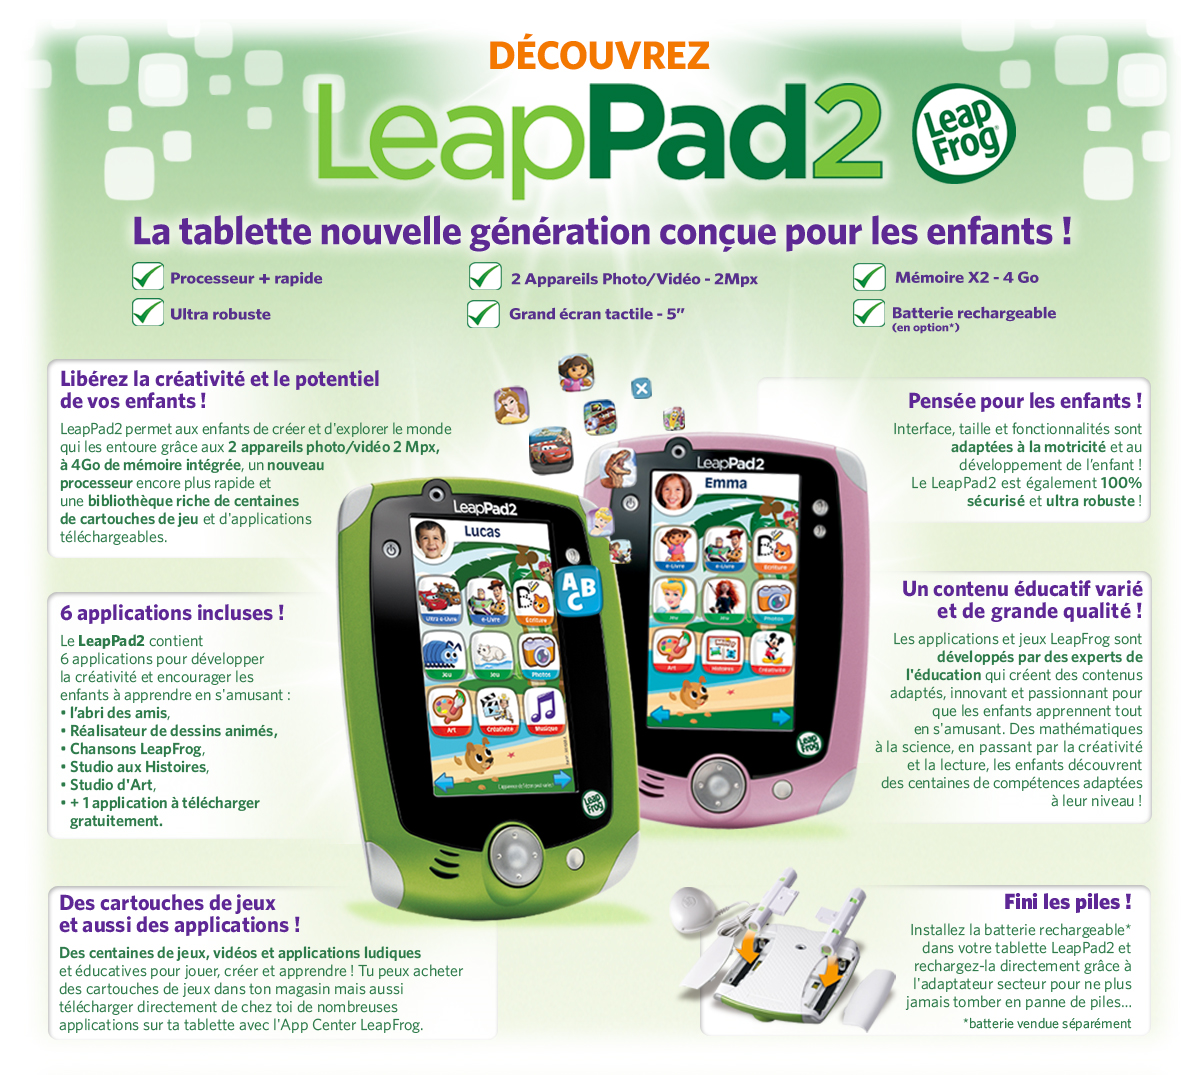 Jeu éducatif LeapPad : Dora L'exploratrice - Sciences 4-7 ans